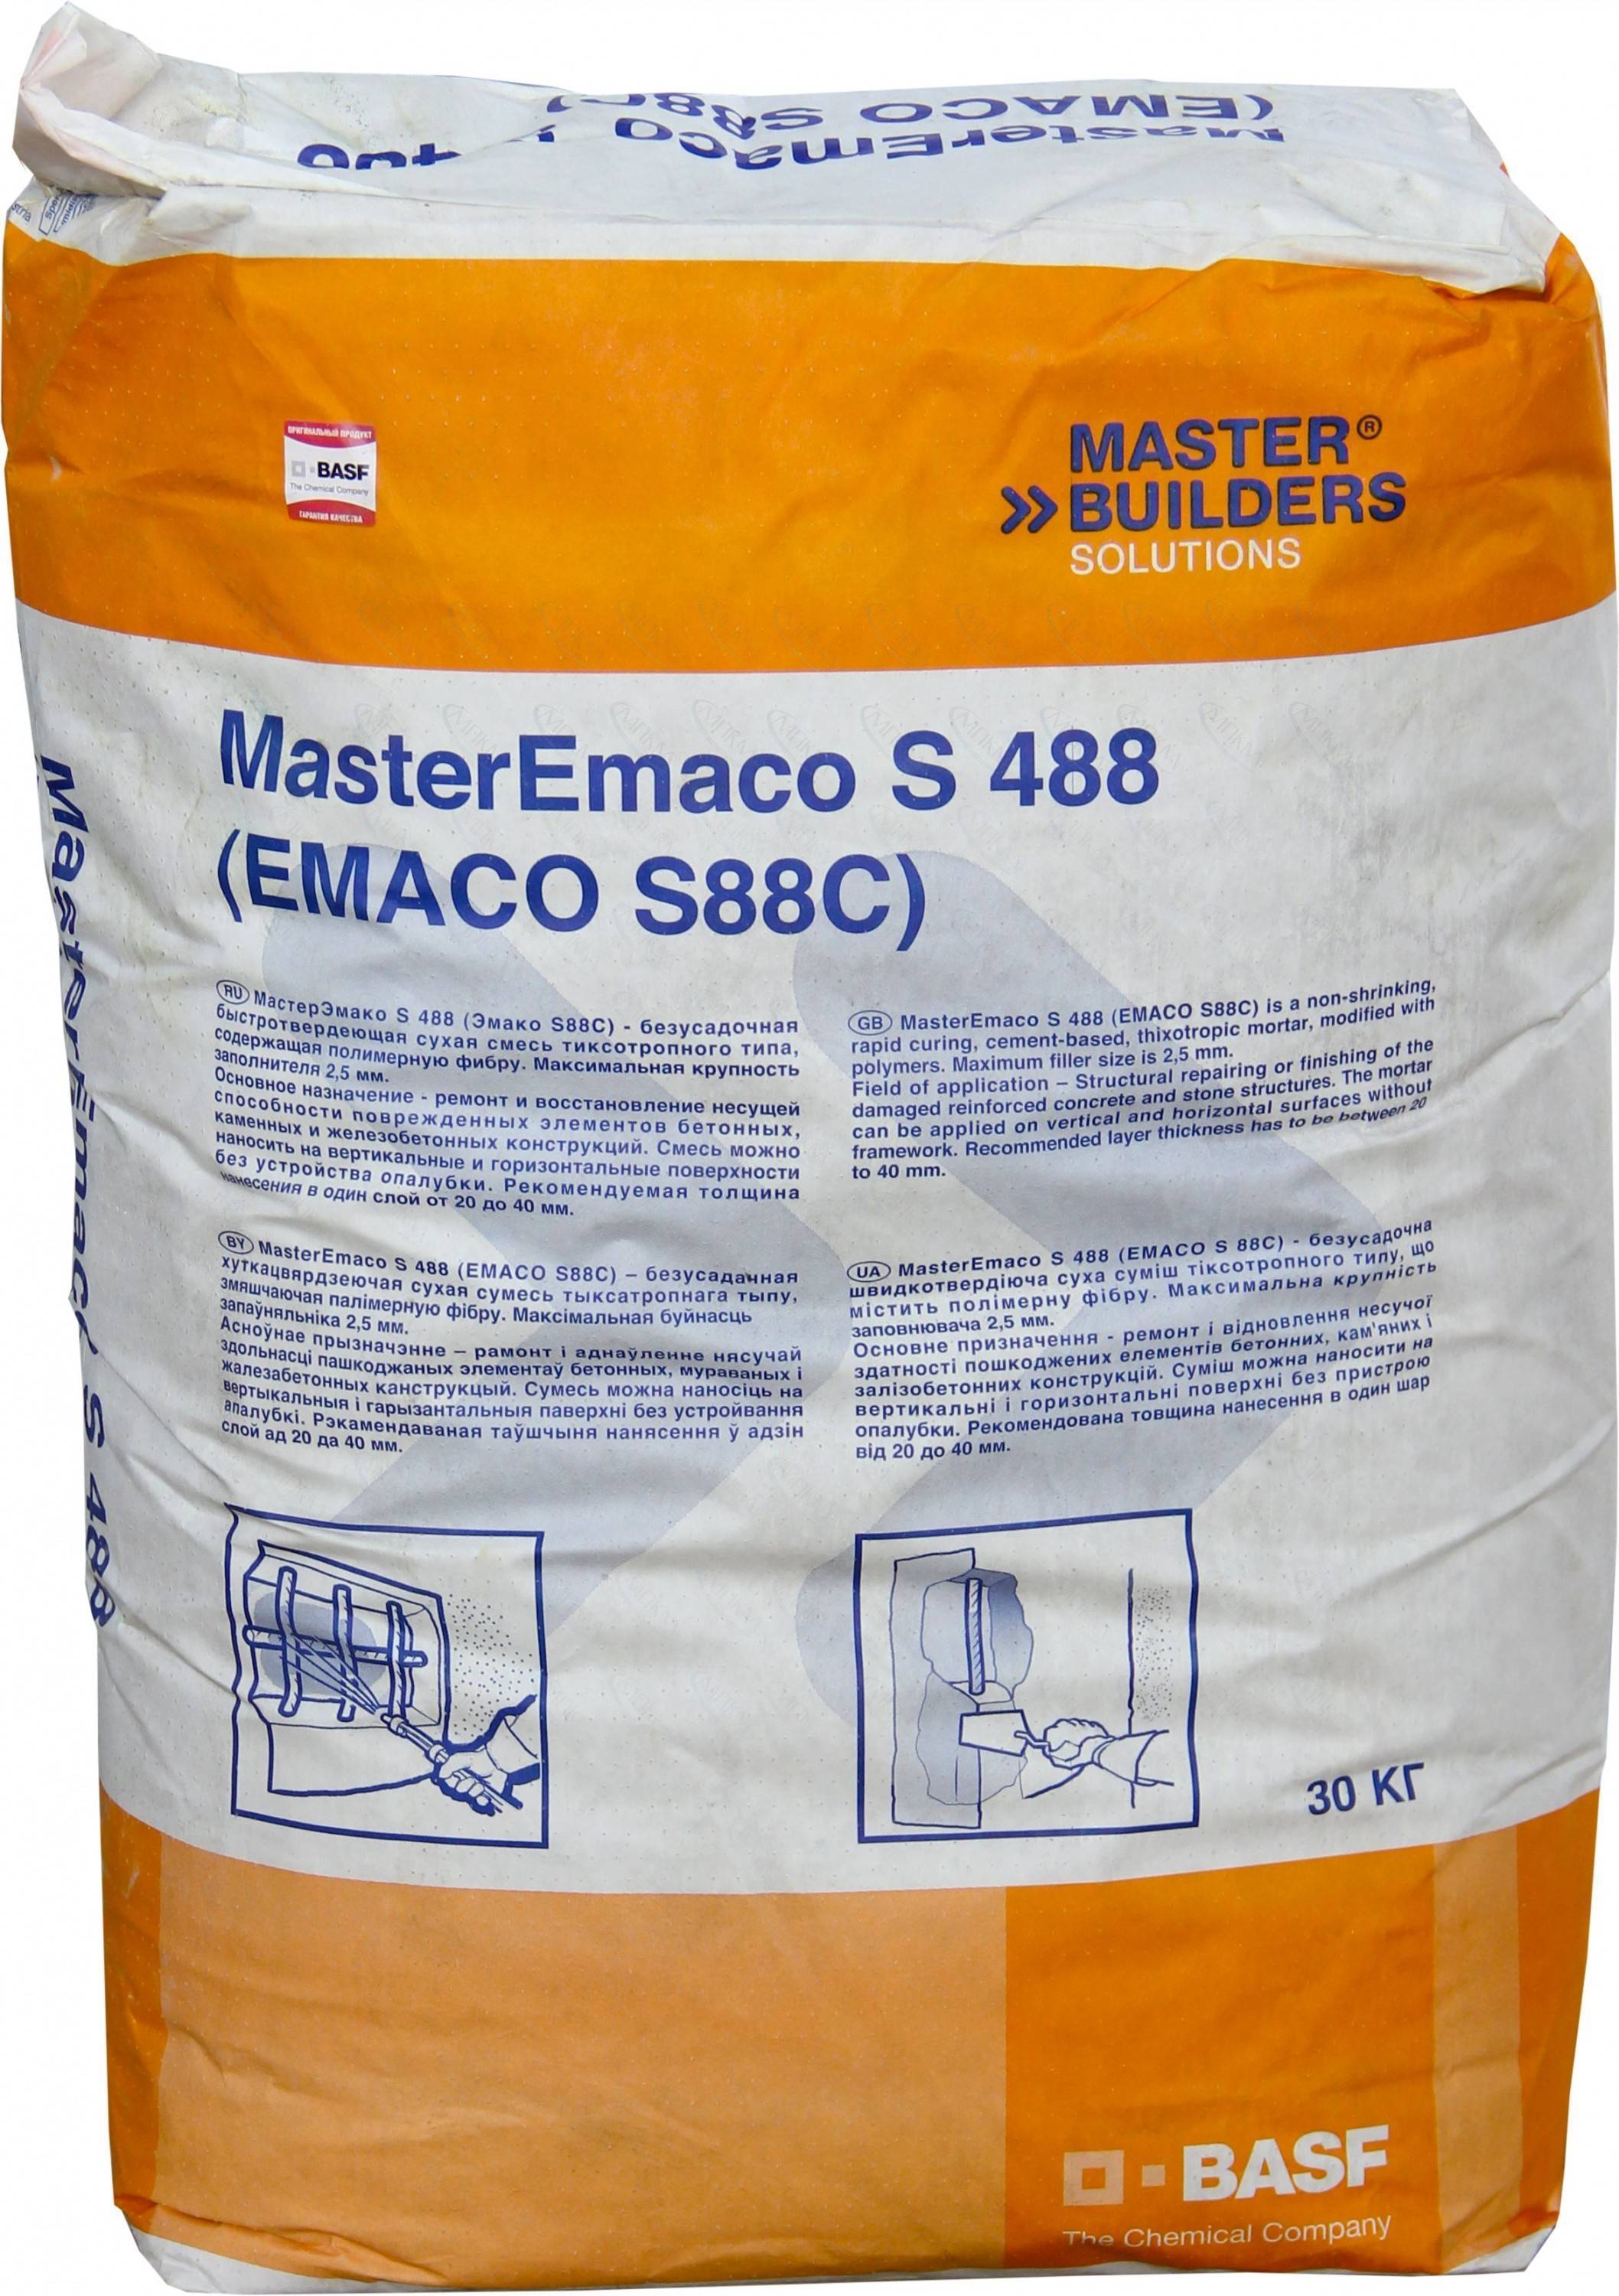 Emaco - ремонтная смесь: технические характеристики сухого полимерцементного материала emaco s88c и masteremaco s 466